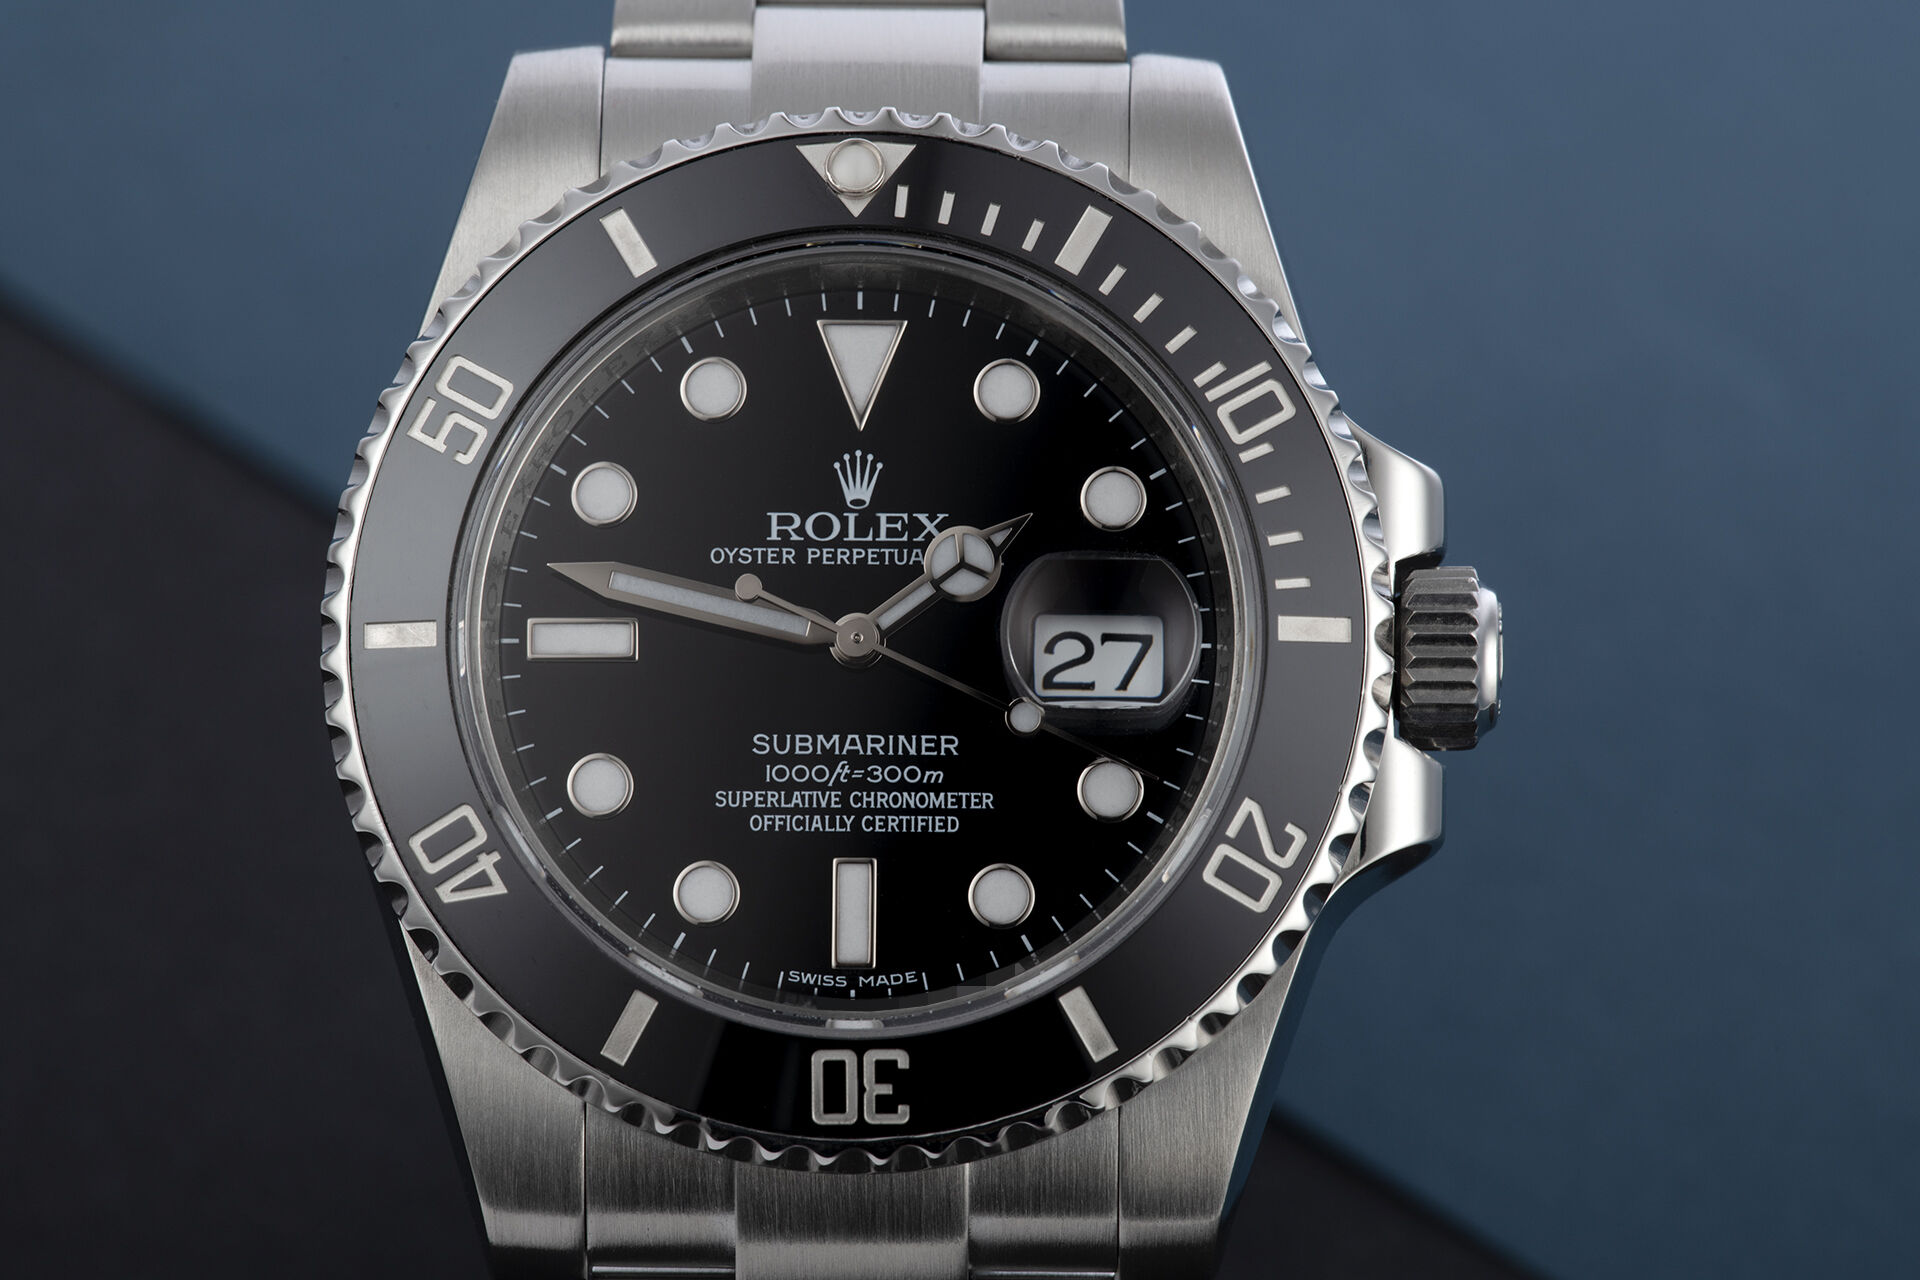 ref 116610LN | Discontinued | Rolex Submariner Date